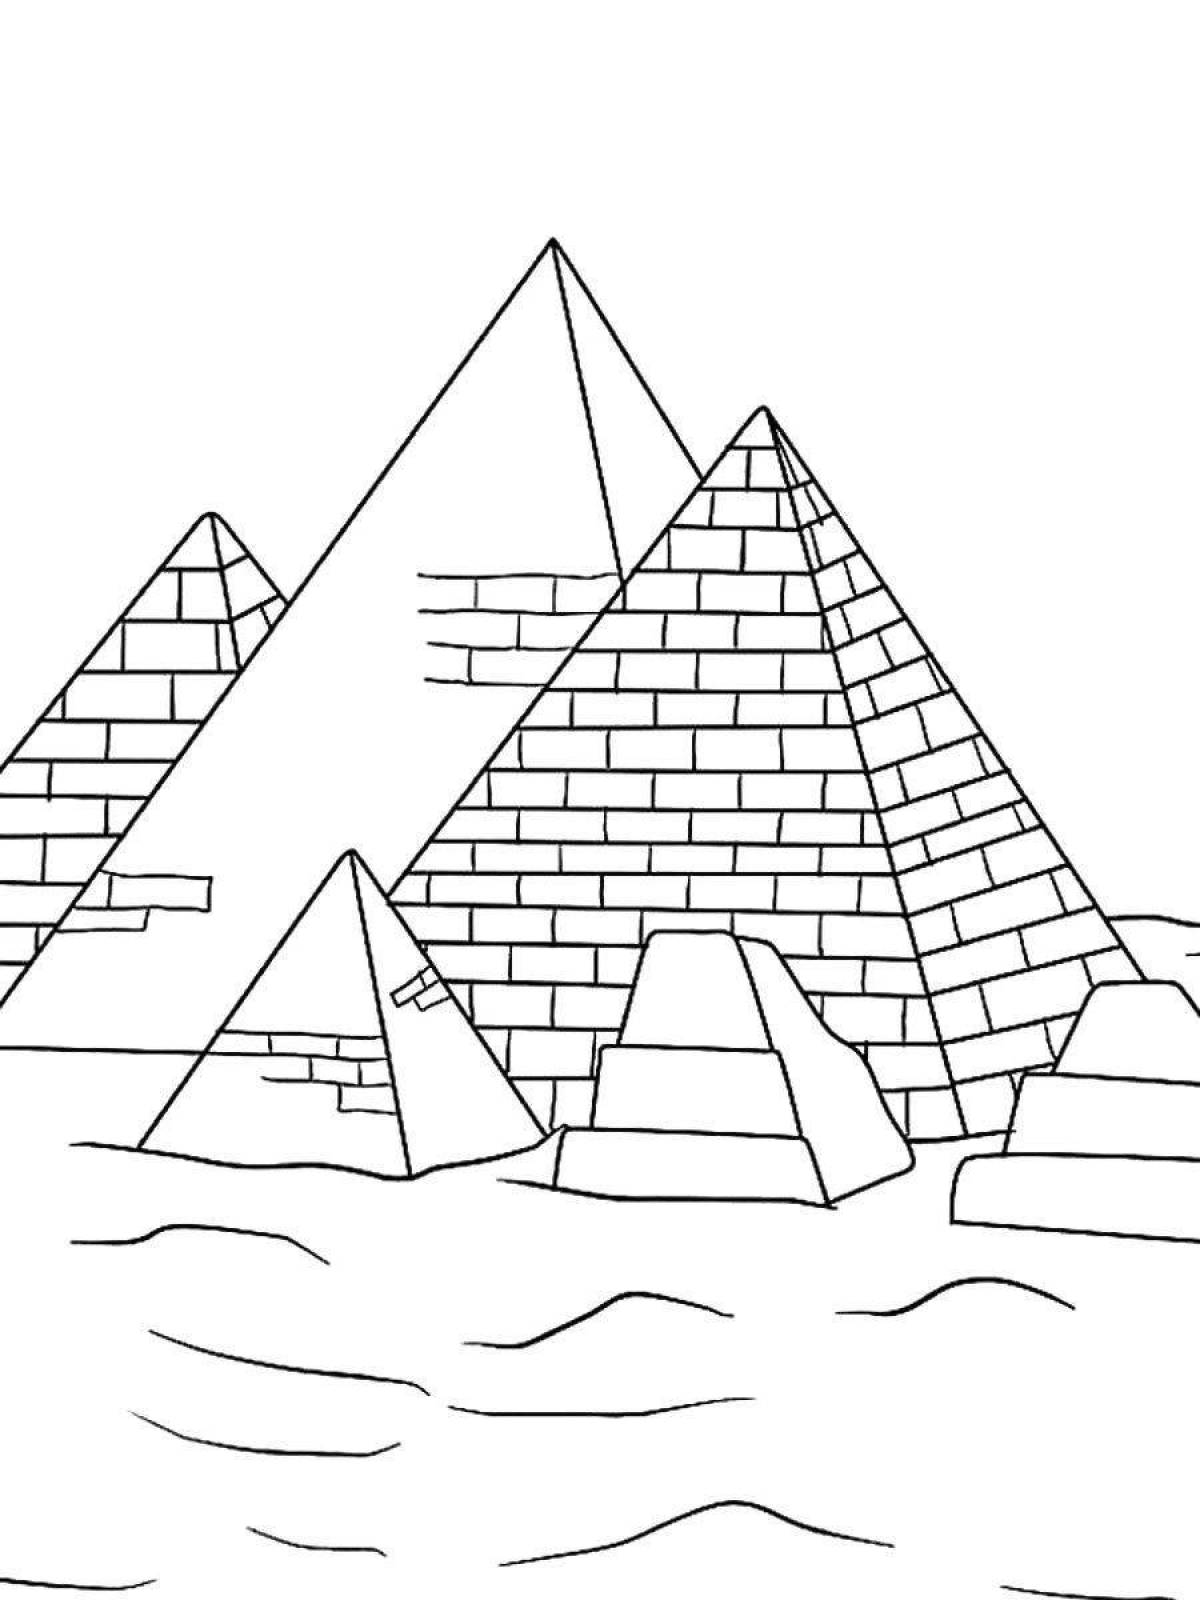 Impressive egyptian pyramids coloring book